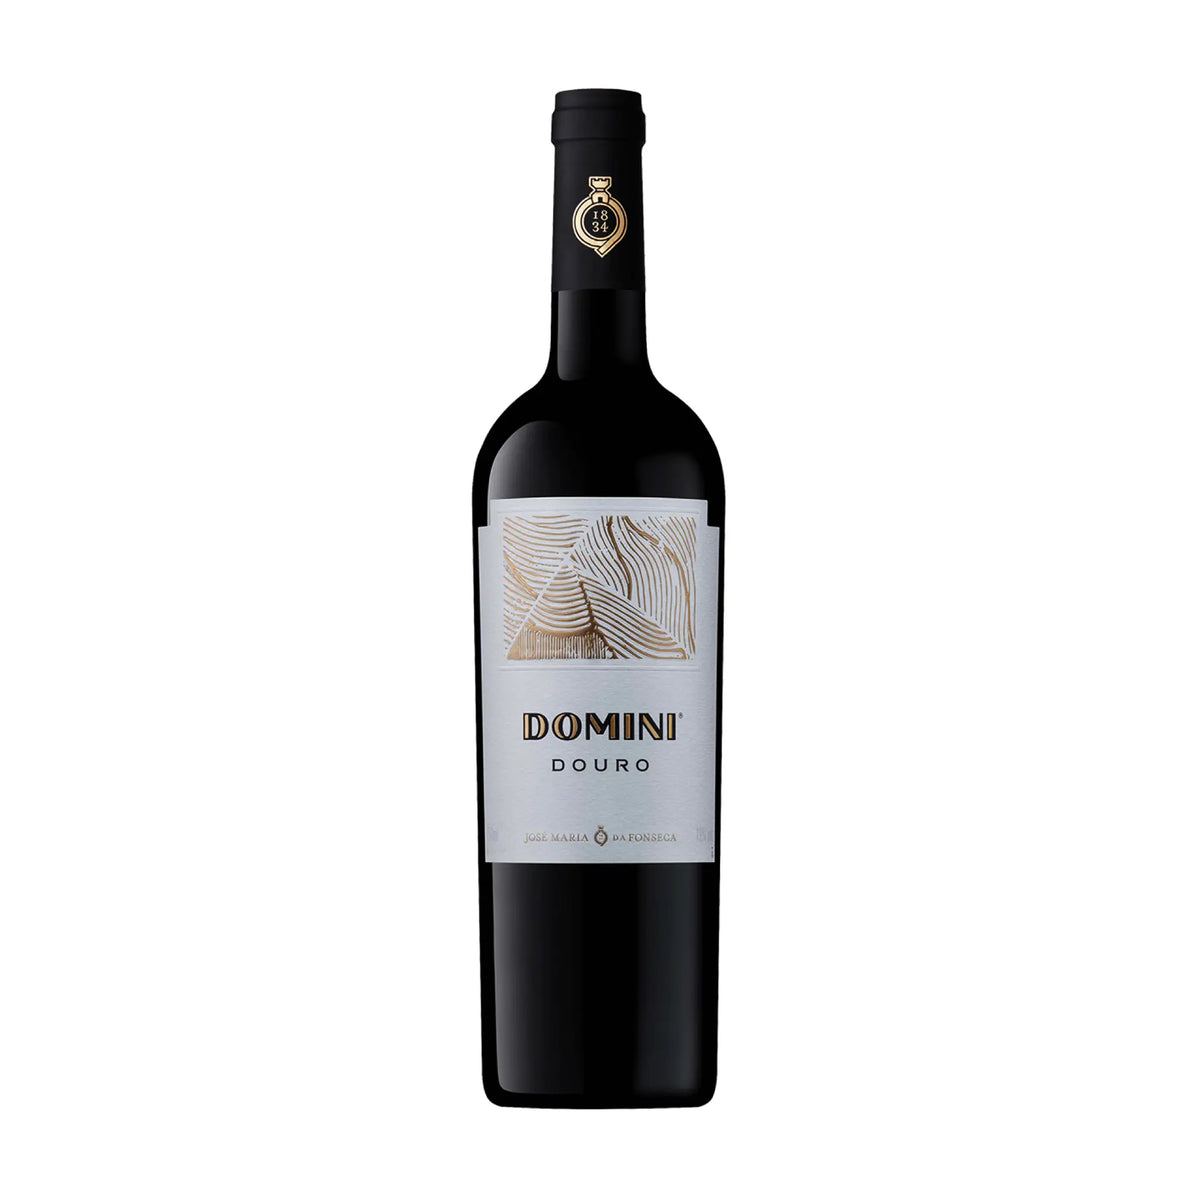 Jose Maria da Fonseca-Rotwein-Cuvée-Portugal-Douro-2019 Domini DOC-WINECOM